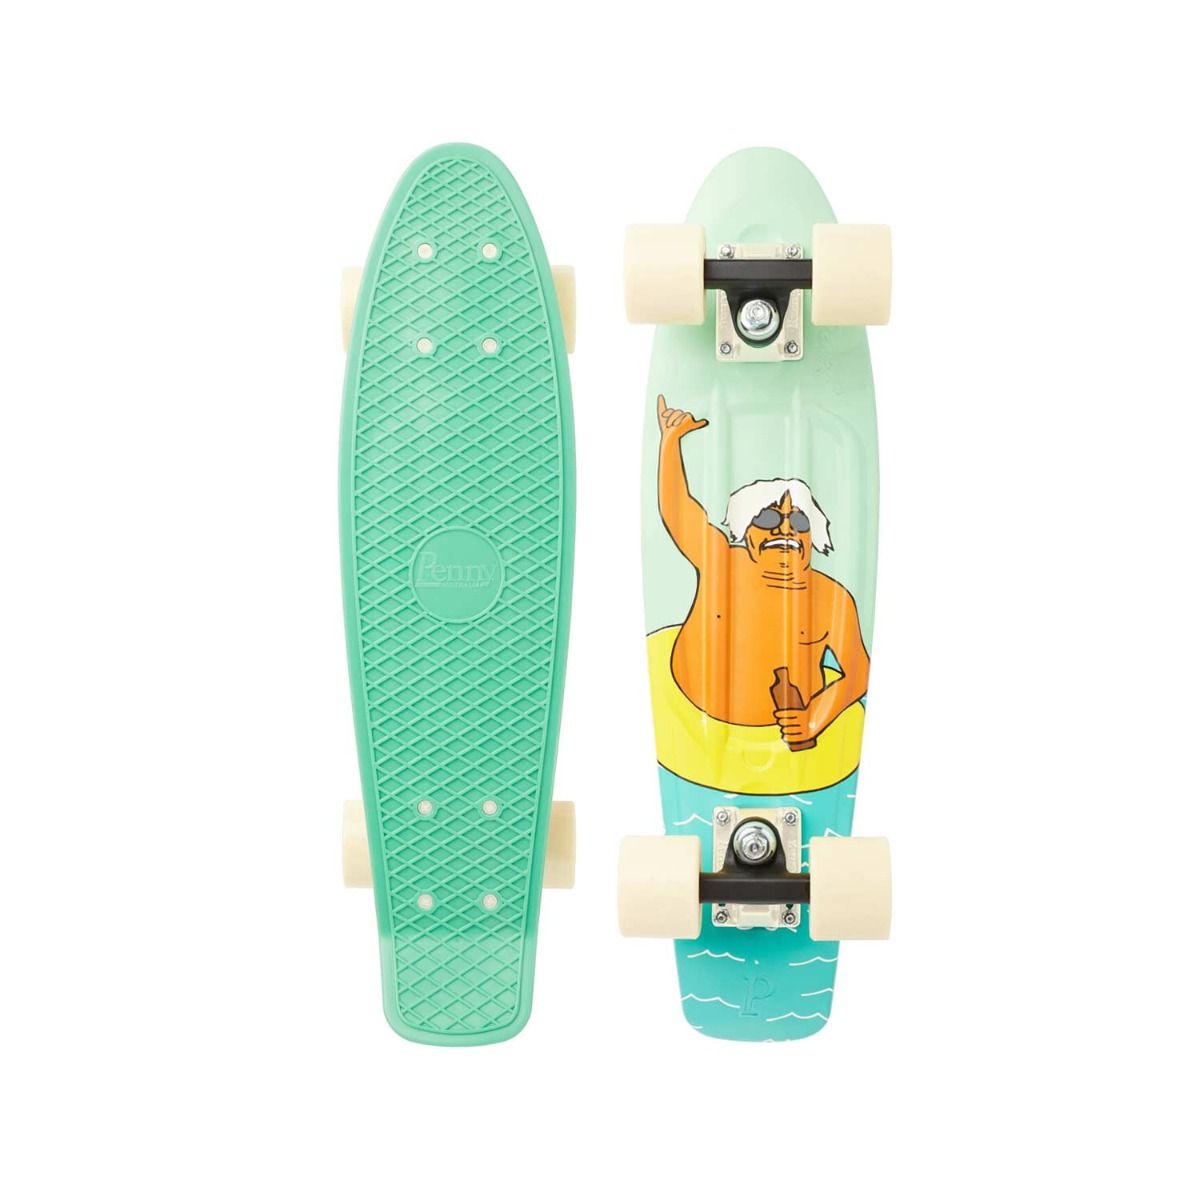 Leuren De Kamer Tegenover Chuck Shaka 22" Penny Board Complete Cruiser Skateboard by Penny Skateboards